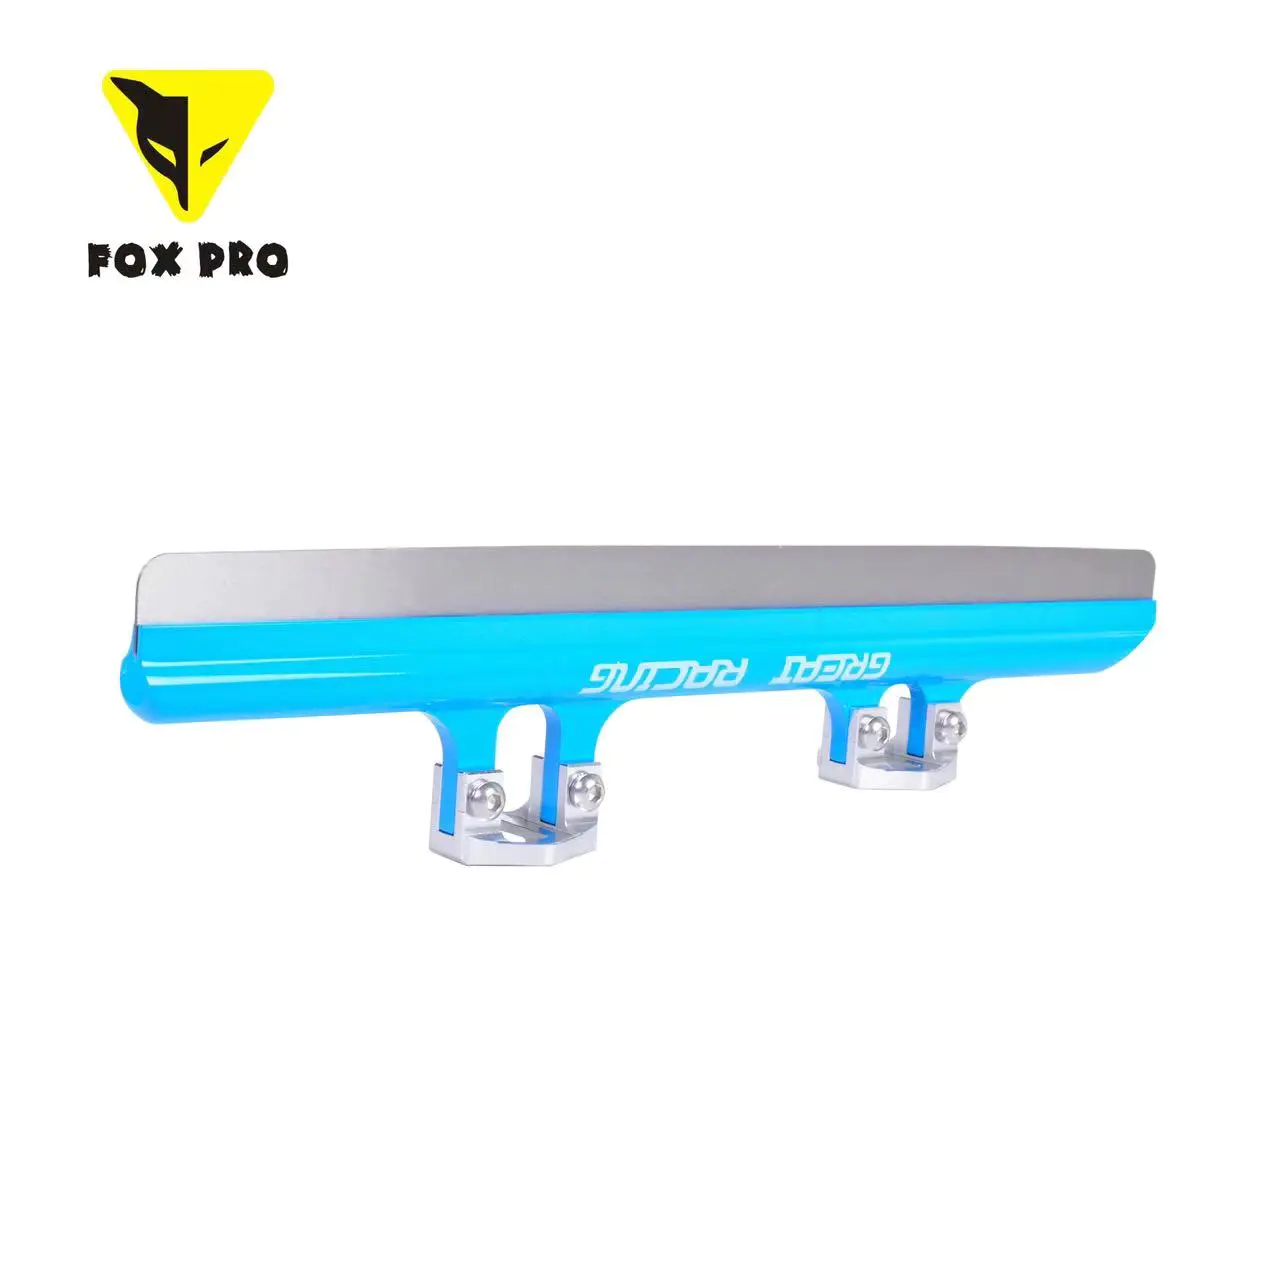 FOX PRO 60 HRC Short Track Ice Skate Blades CNC Aluminum 7005 Ice Skate Blades For MEN&Women Indoor/Outdoor Sports